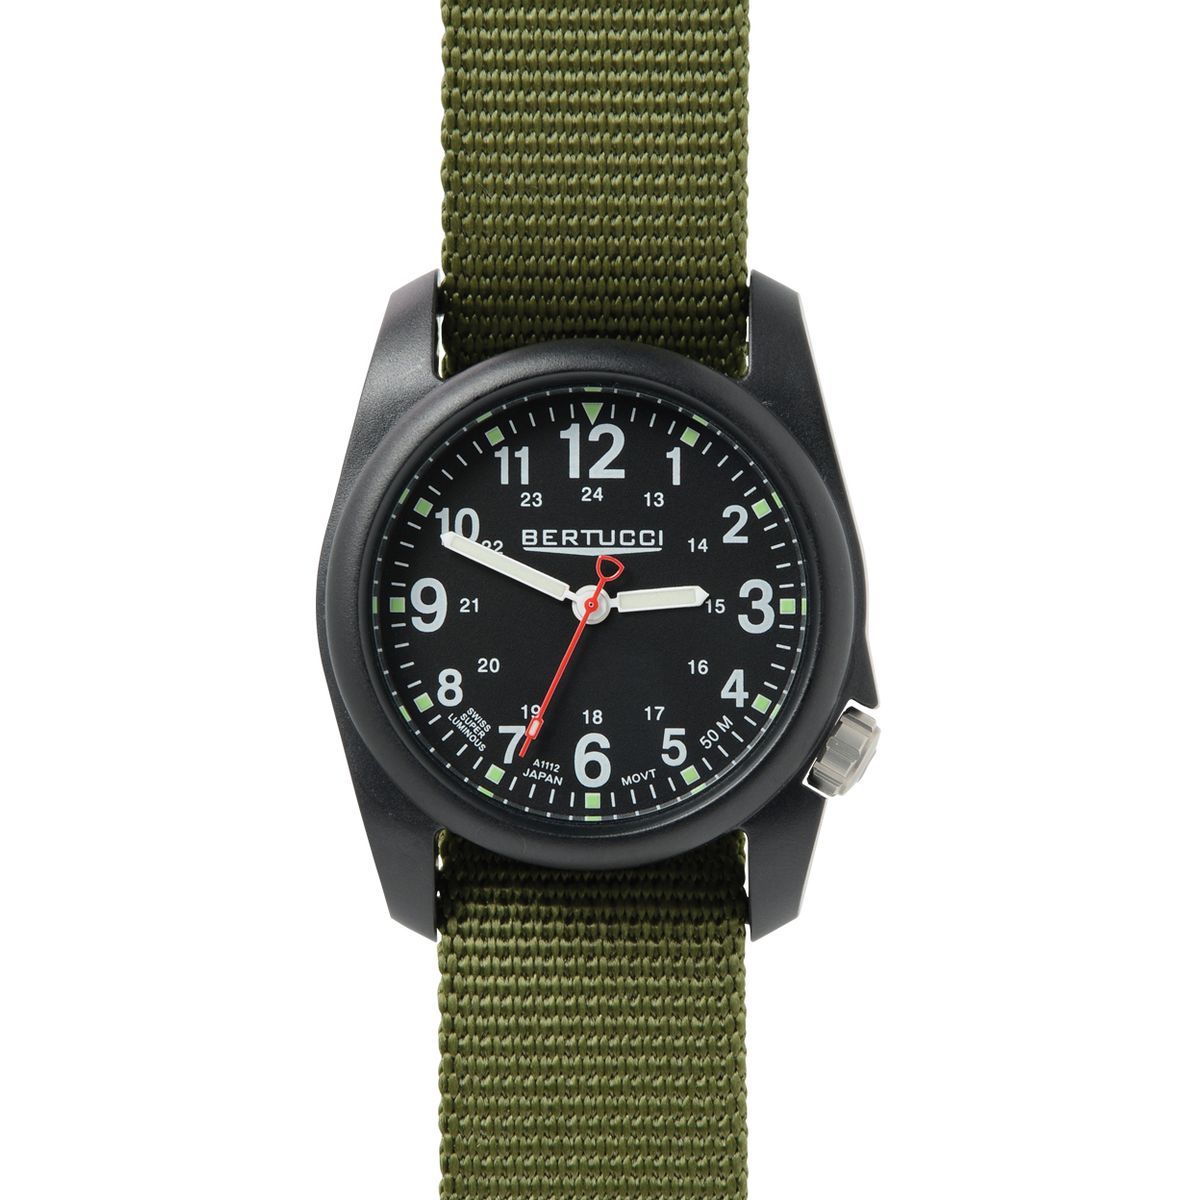 Bertucci Watches DX3 Field Watch